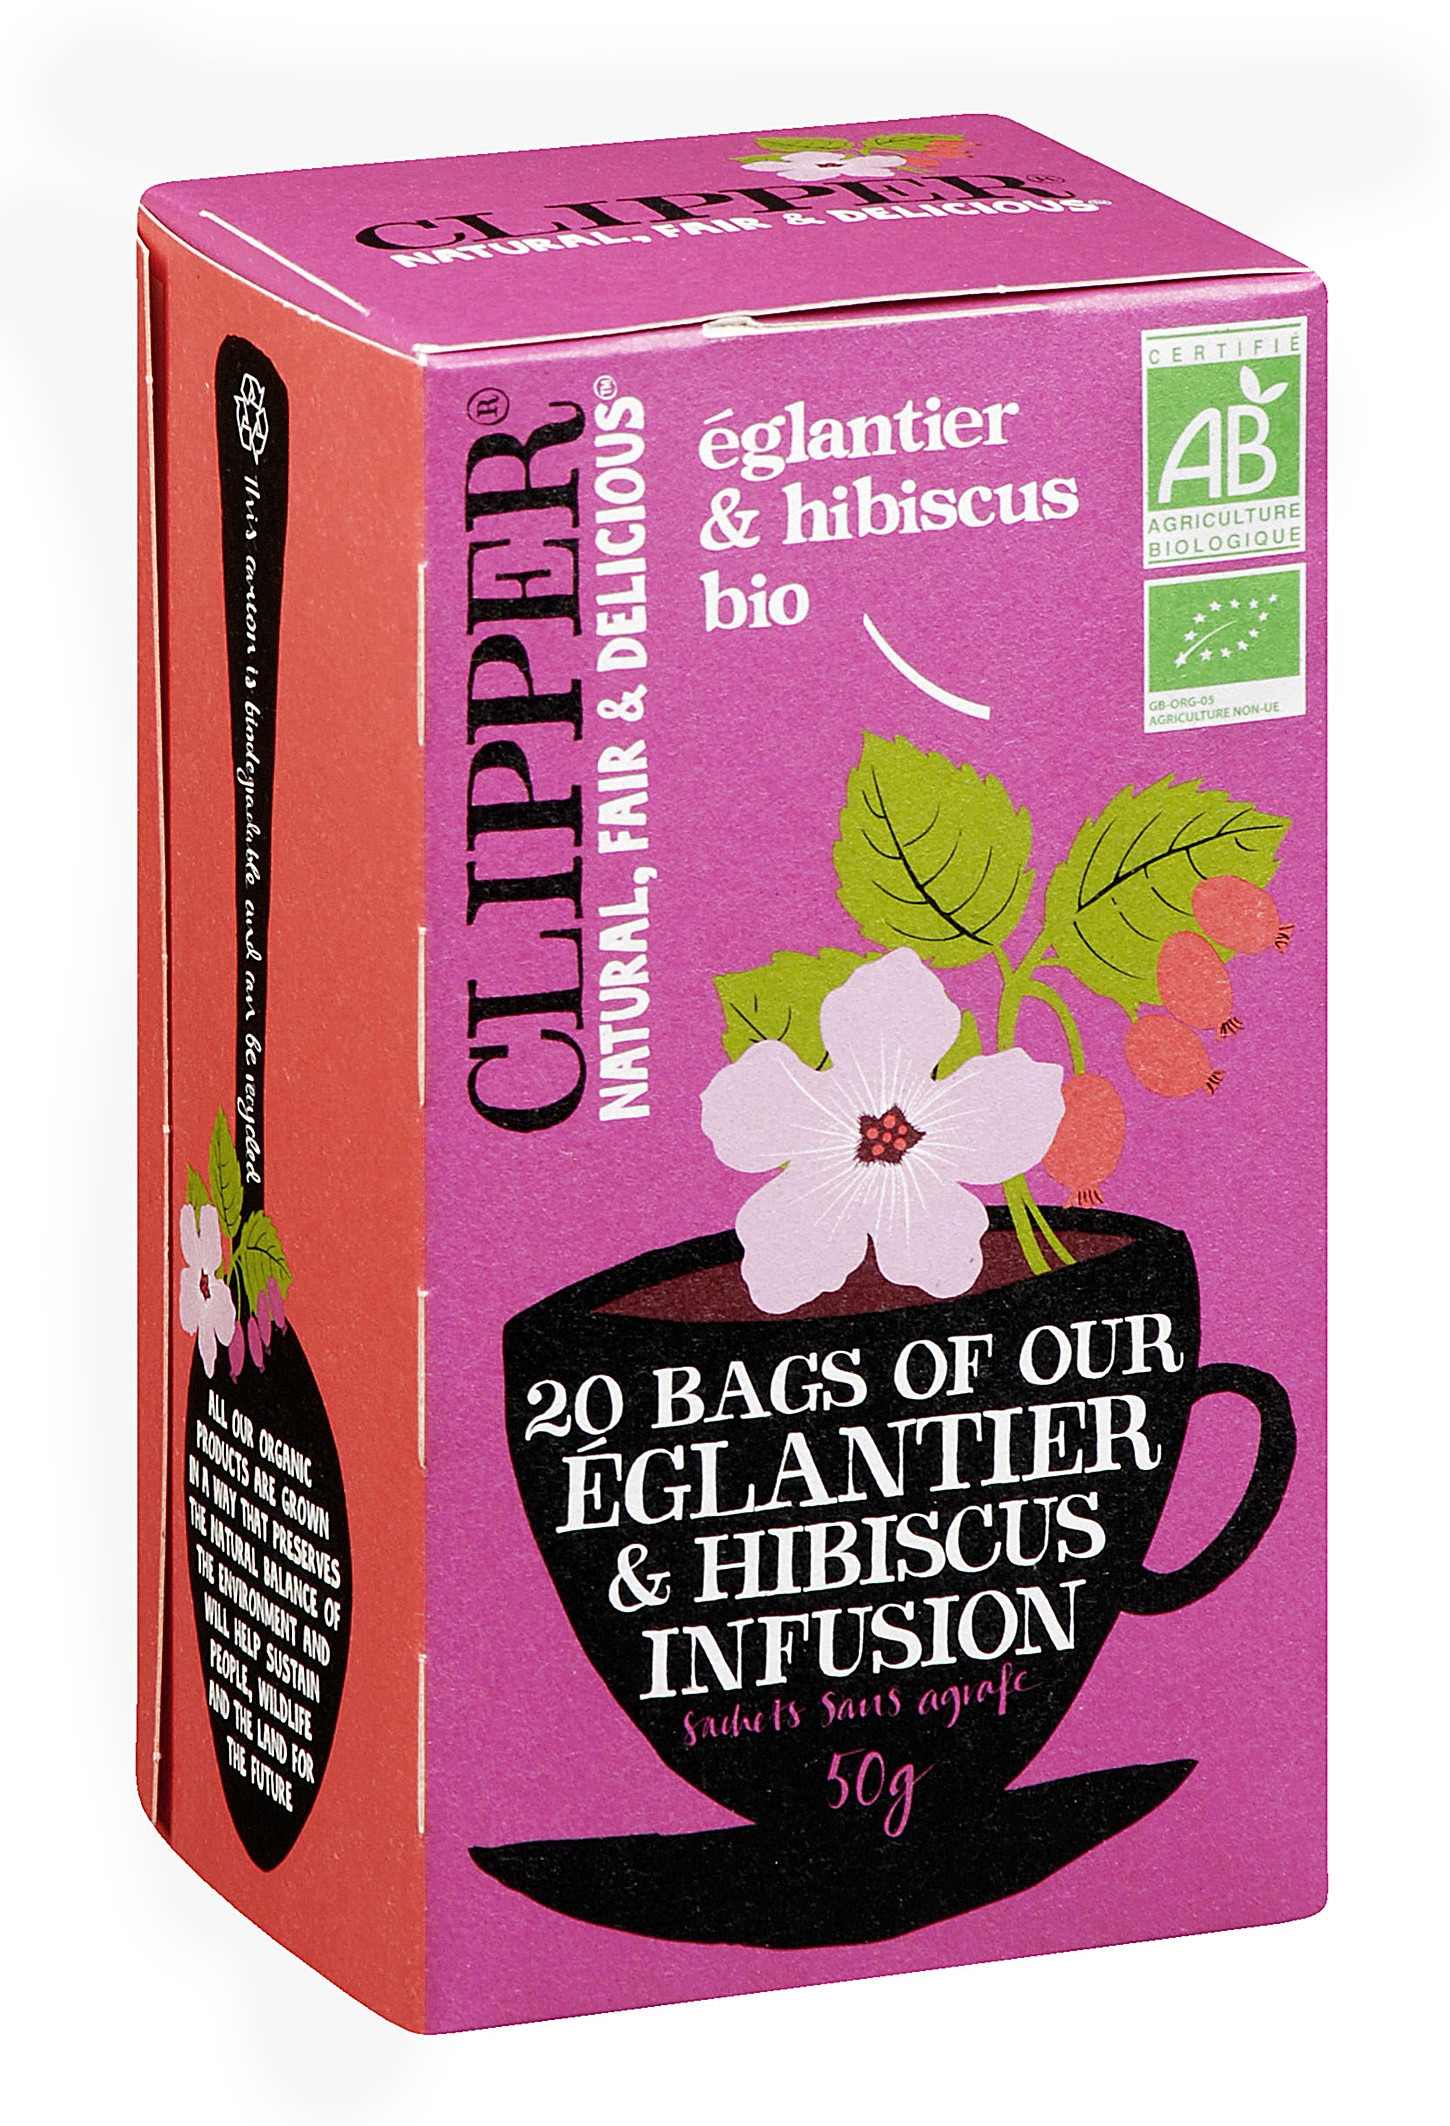 Infusion - Églantier & Hibiscus Bio 